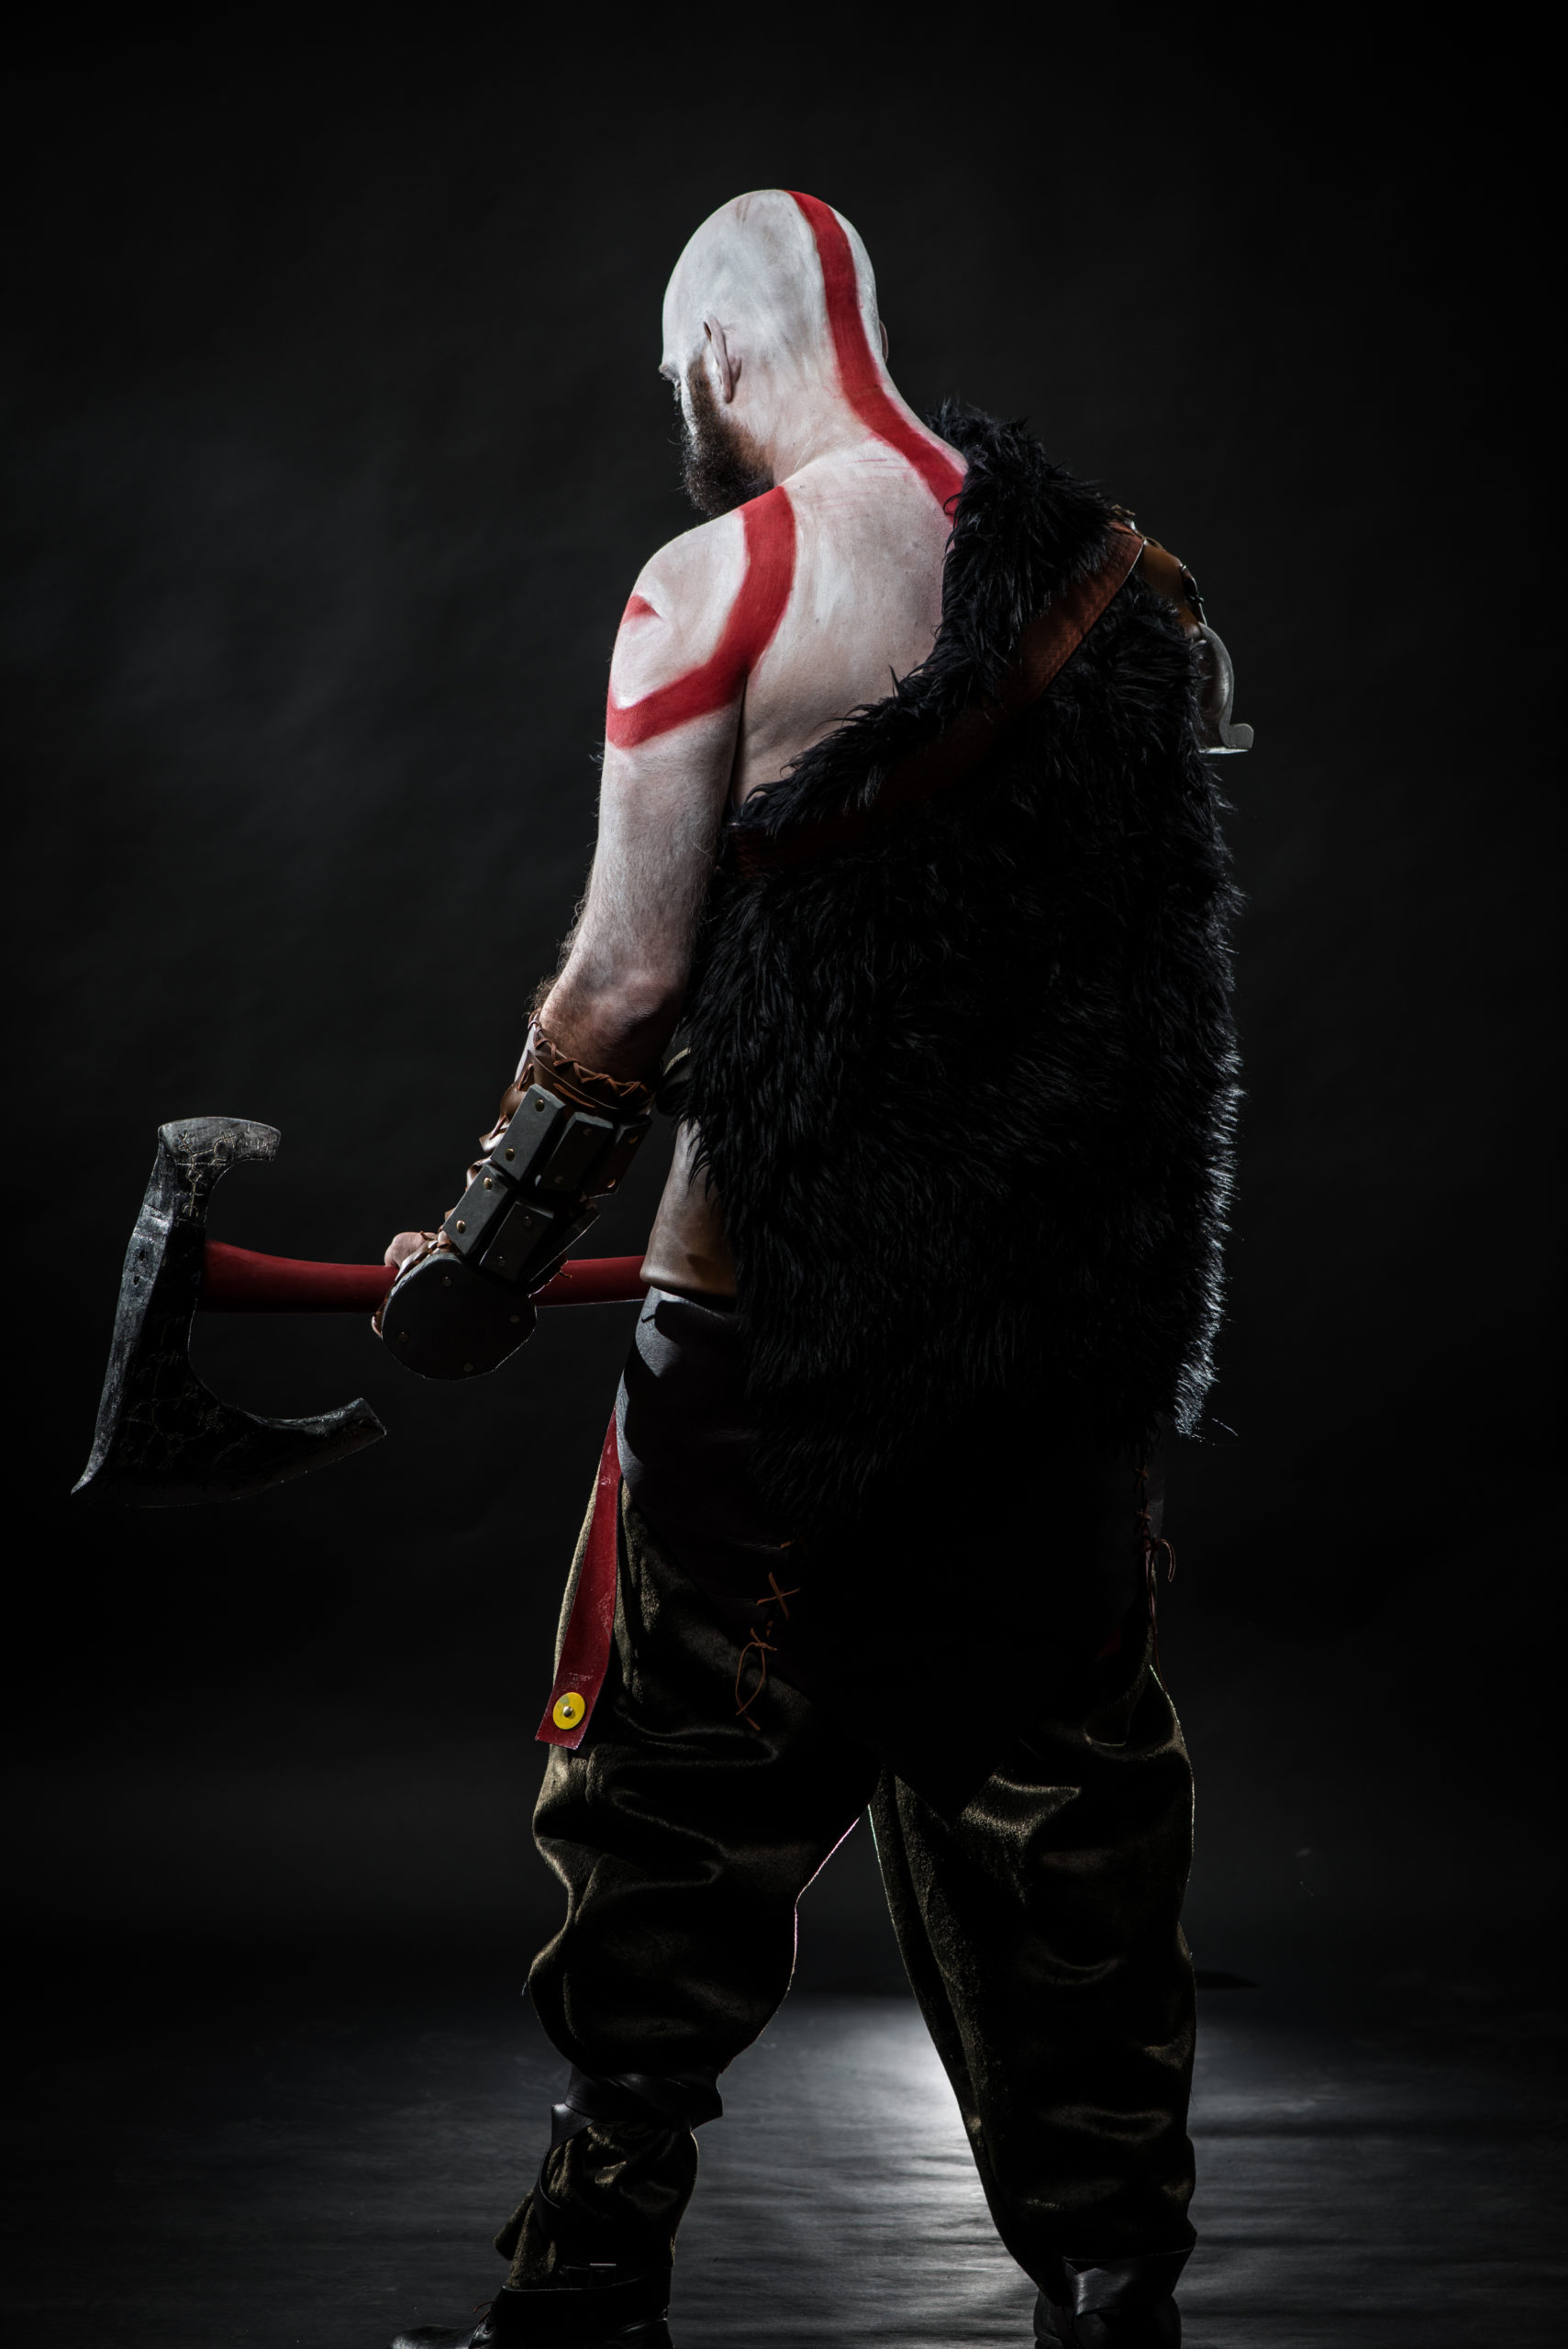 He Is Kratos, The Cosplay God Of War